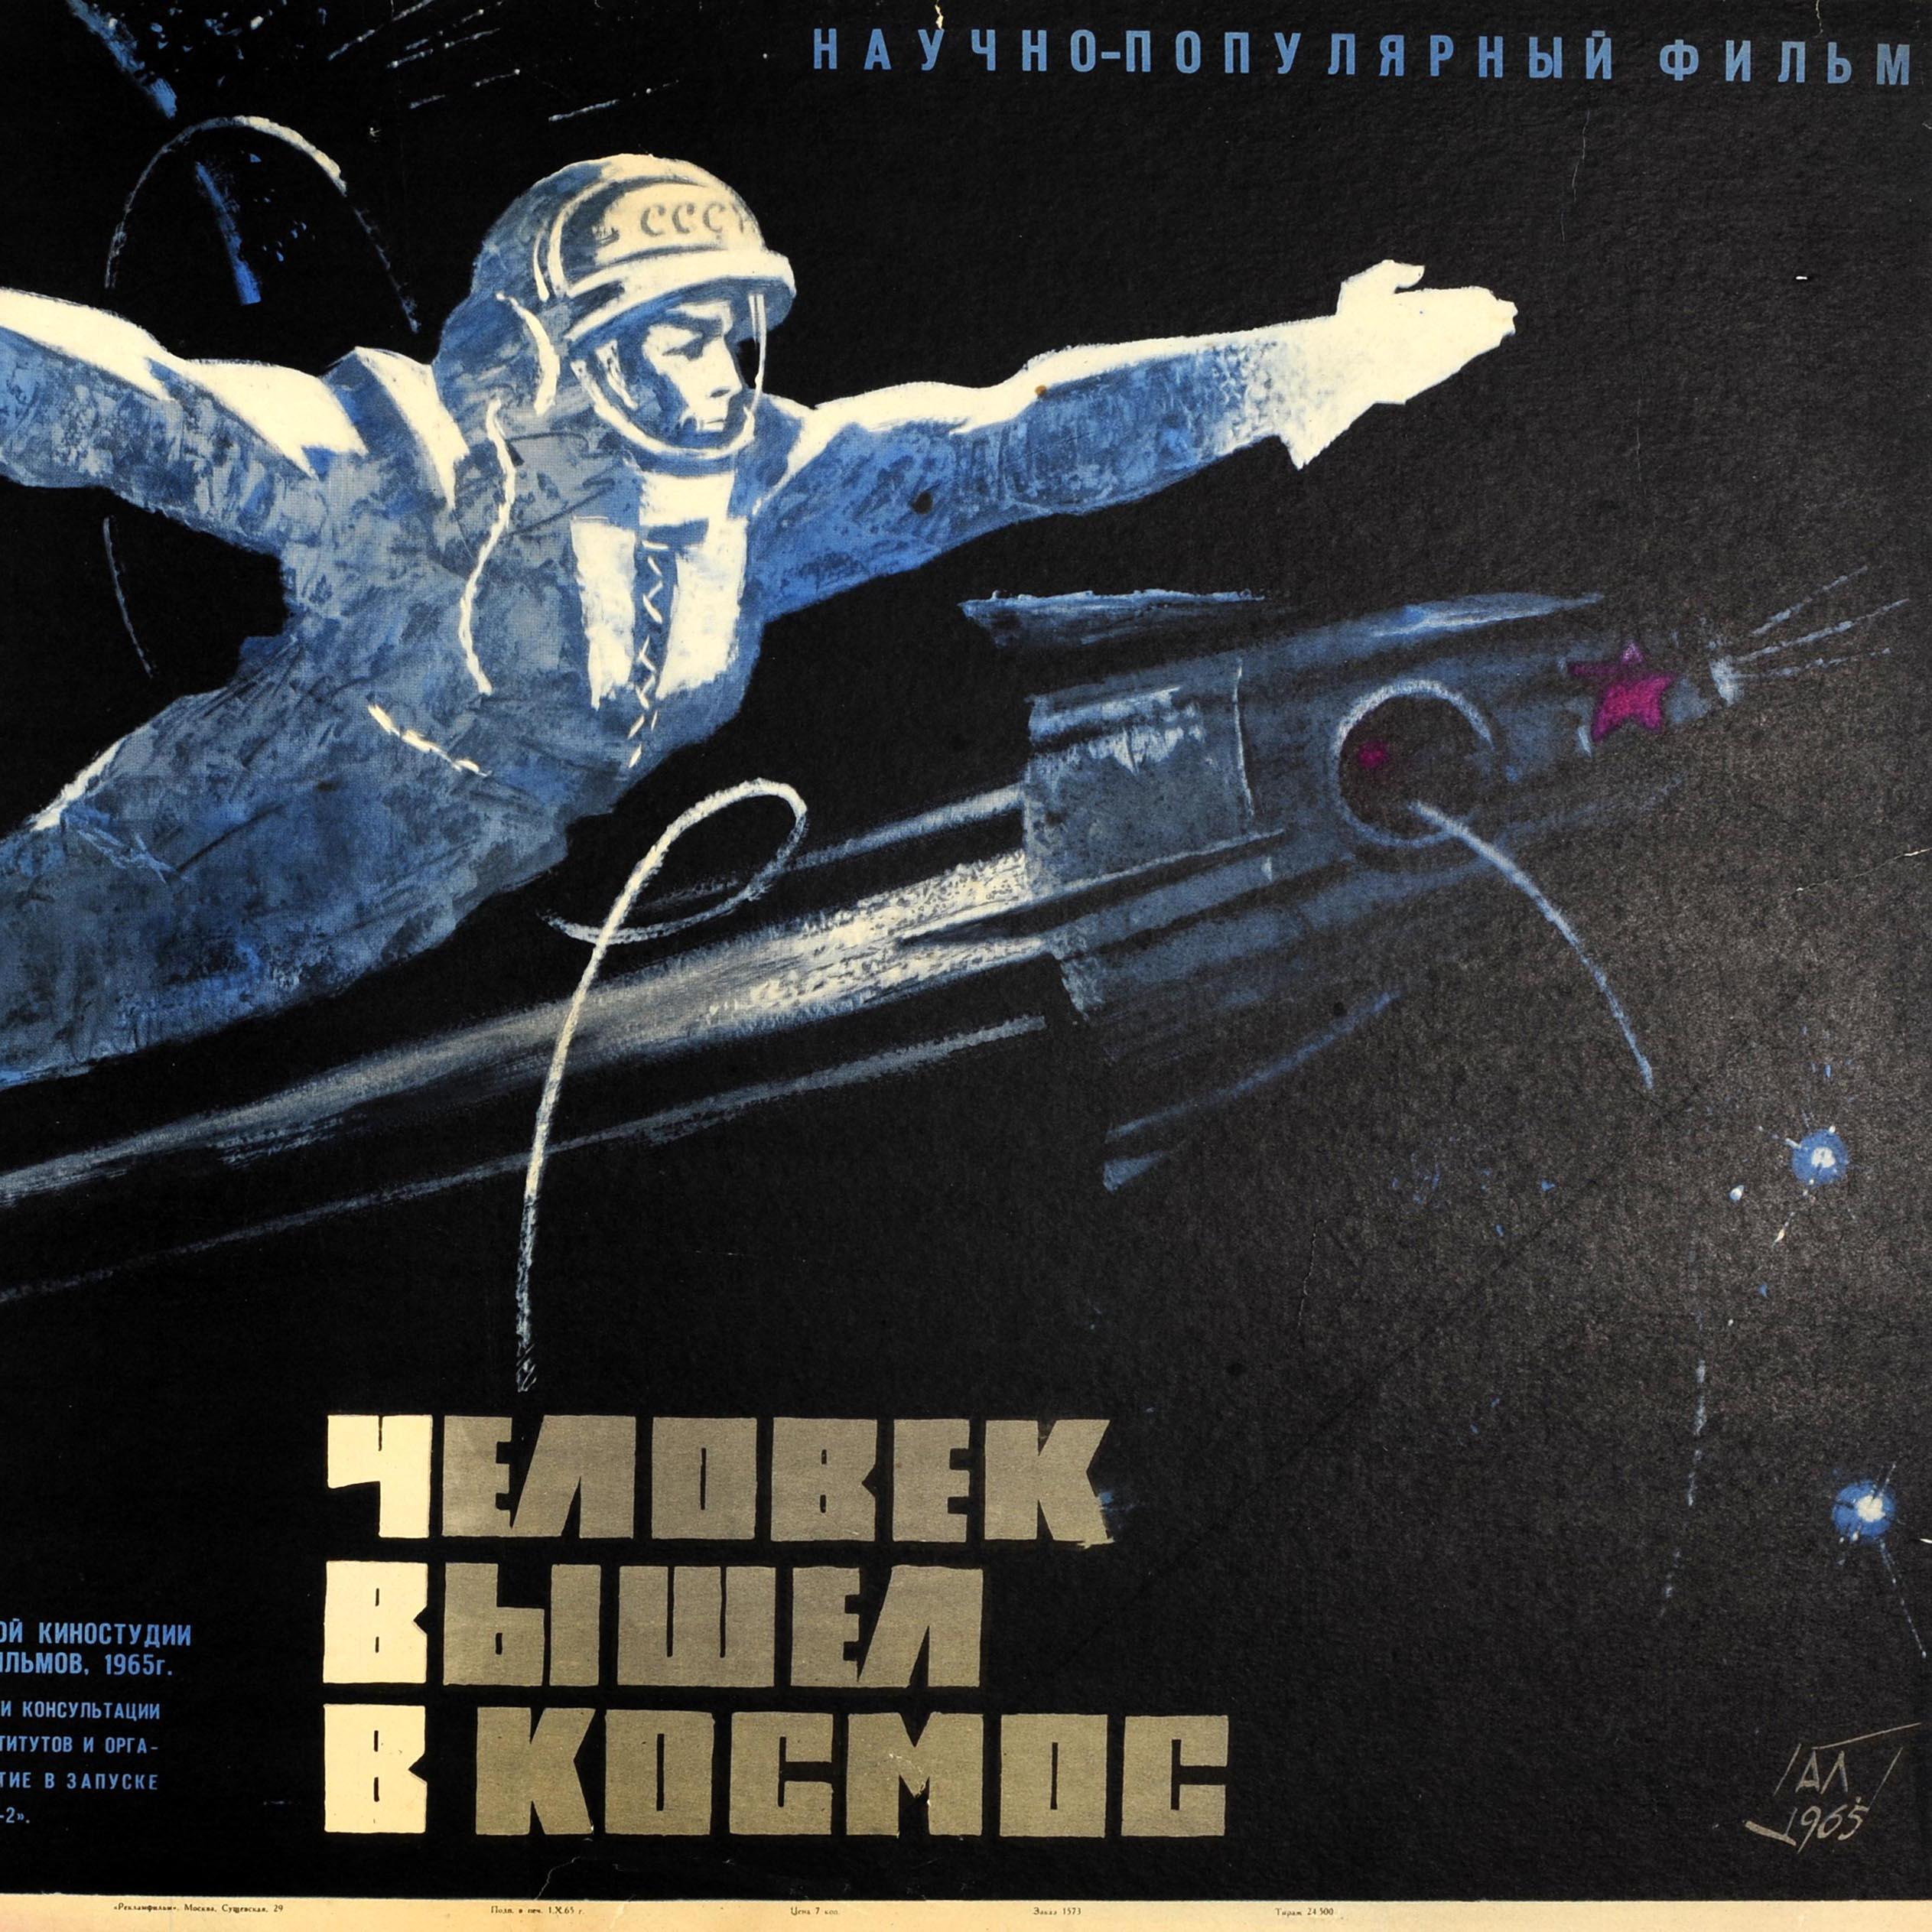 ussr cosmonaut